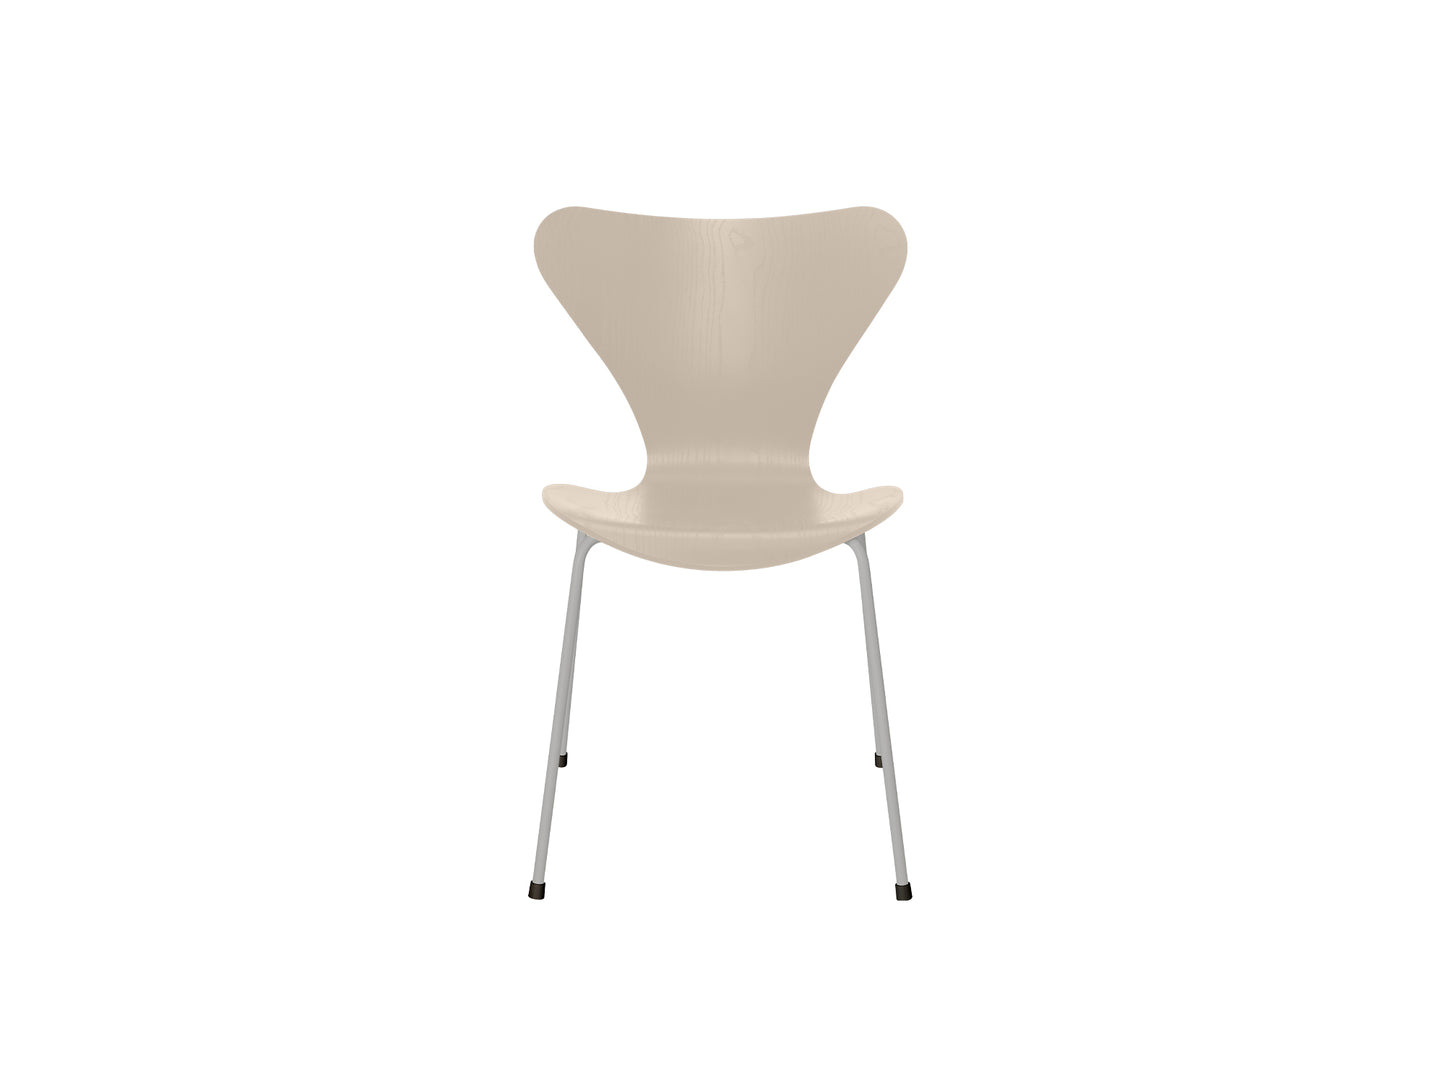 Series 7™ 3107 Dining Chair by Fritz Hansen - Light Beige Coloured Ash Veneer Shell / Nine Grey Steel